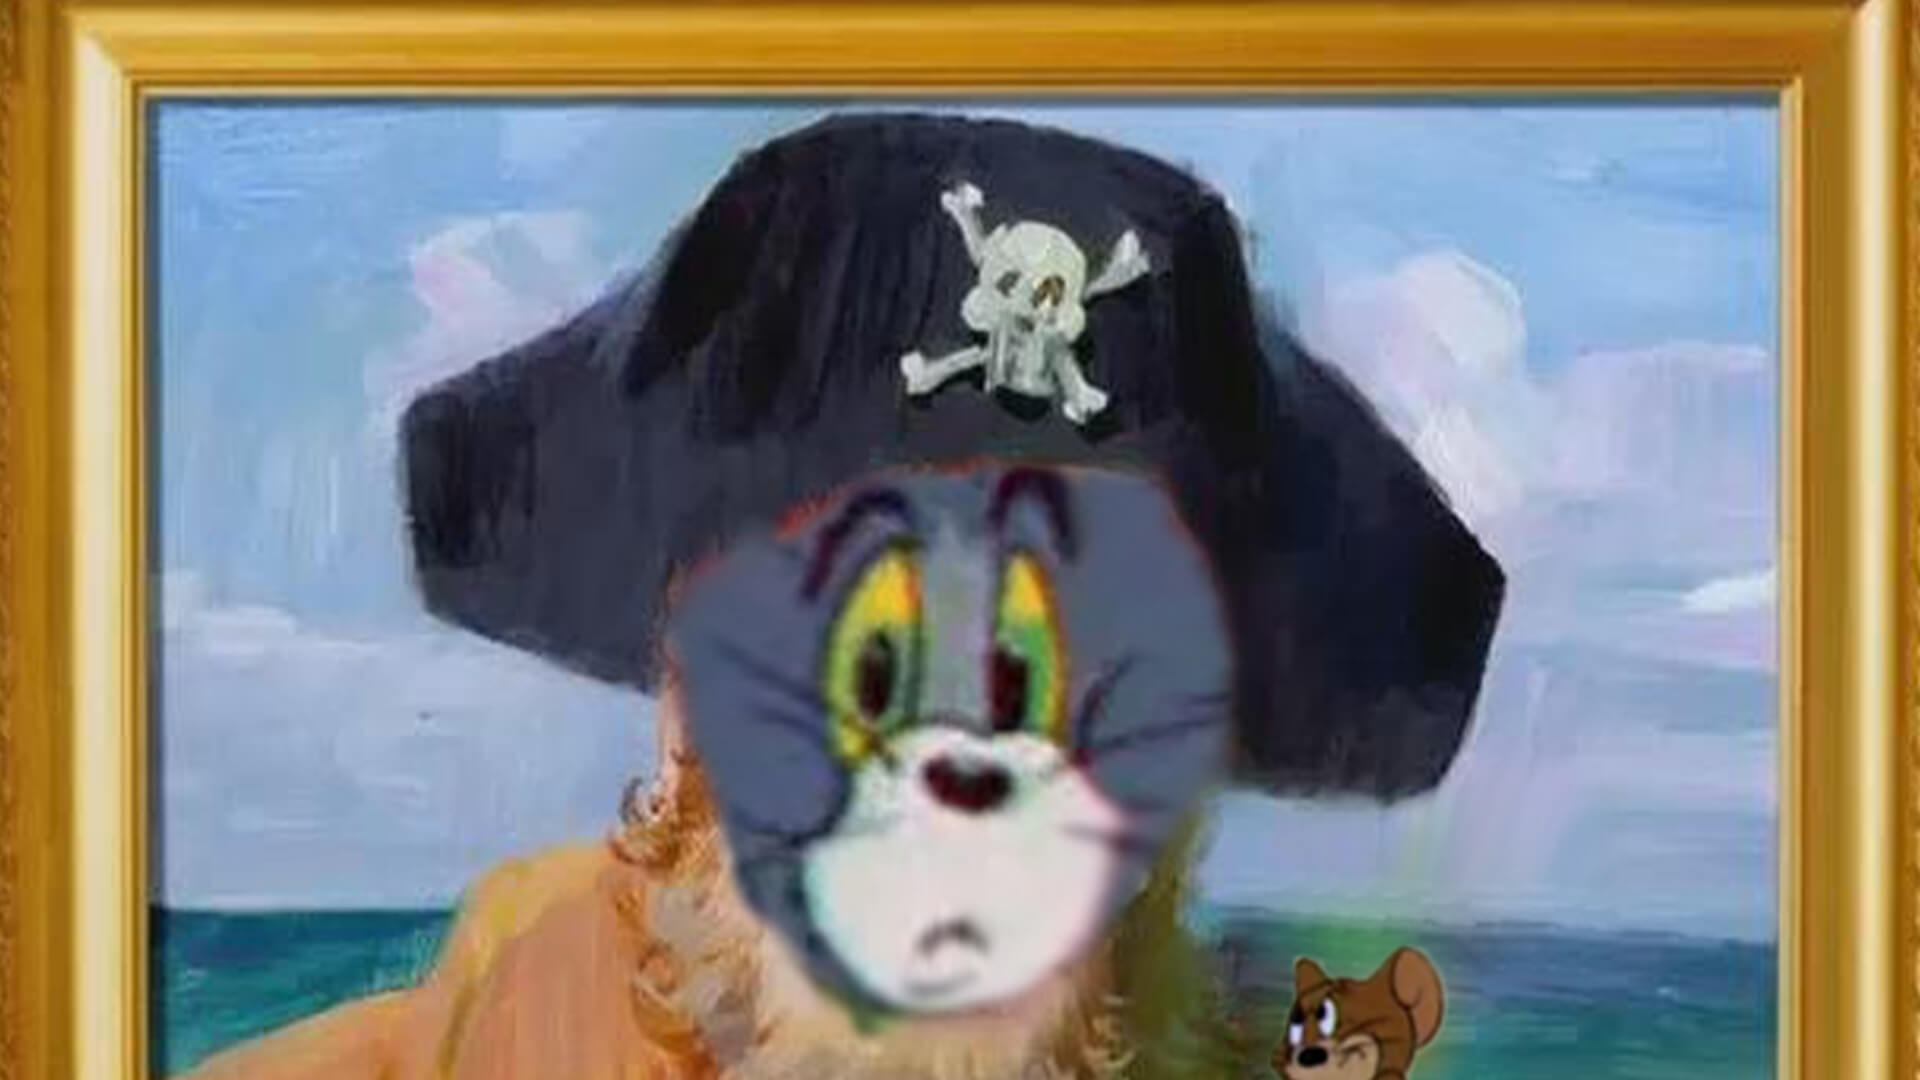 Tom and Jerry Plays Spongebob Squarepants' Theme - Bilibili